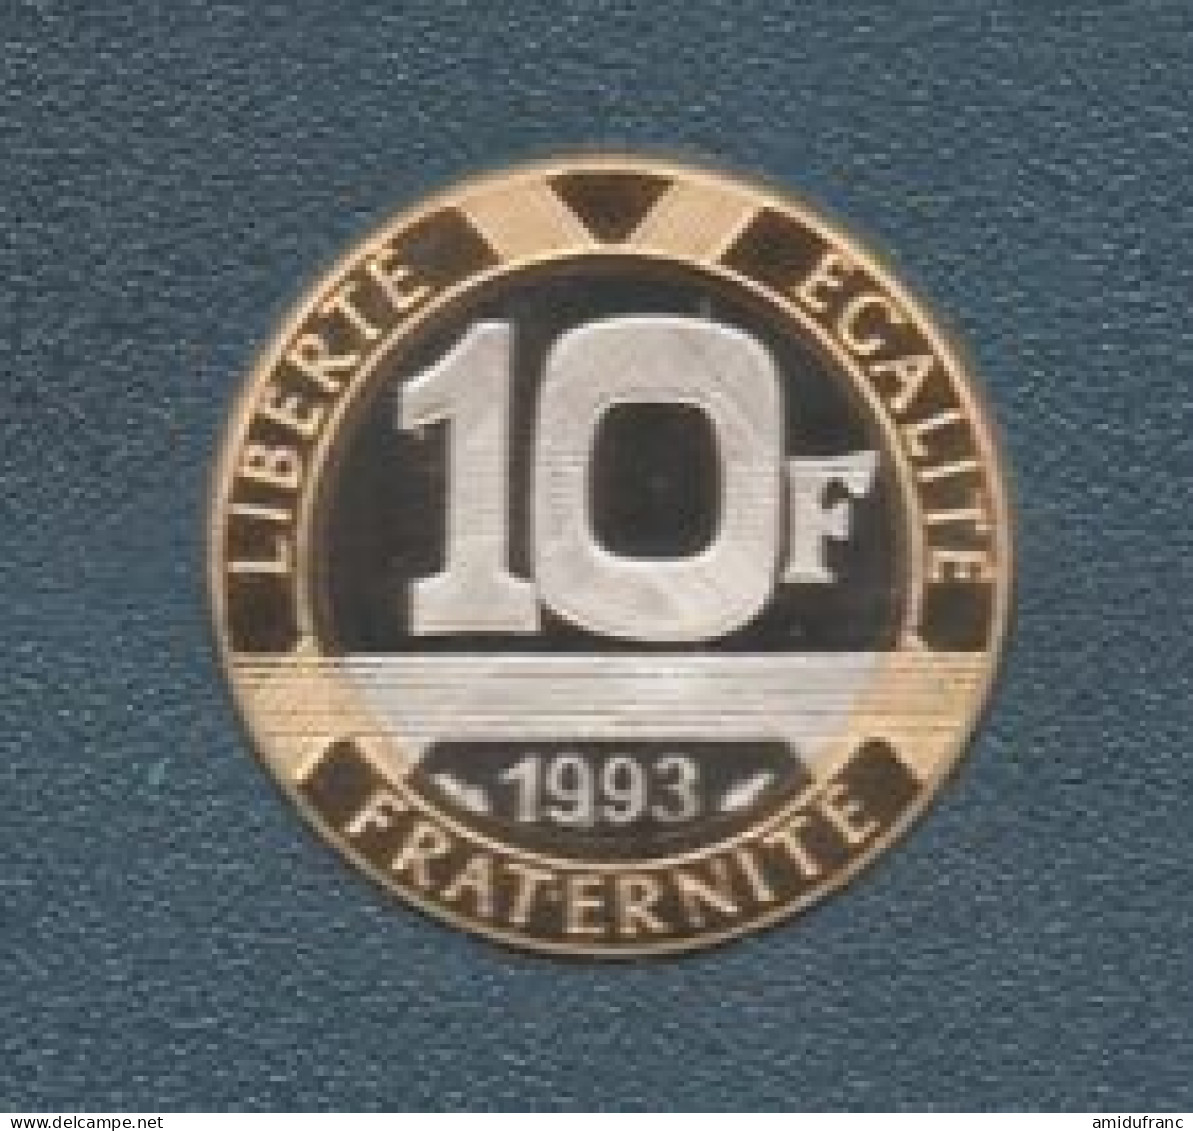 10 Francs 1993 BE Du Coffret - BU, Proofs & Presentation Cases